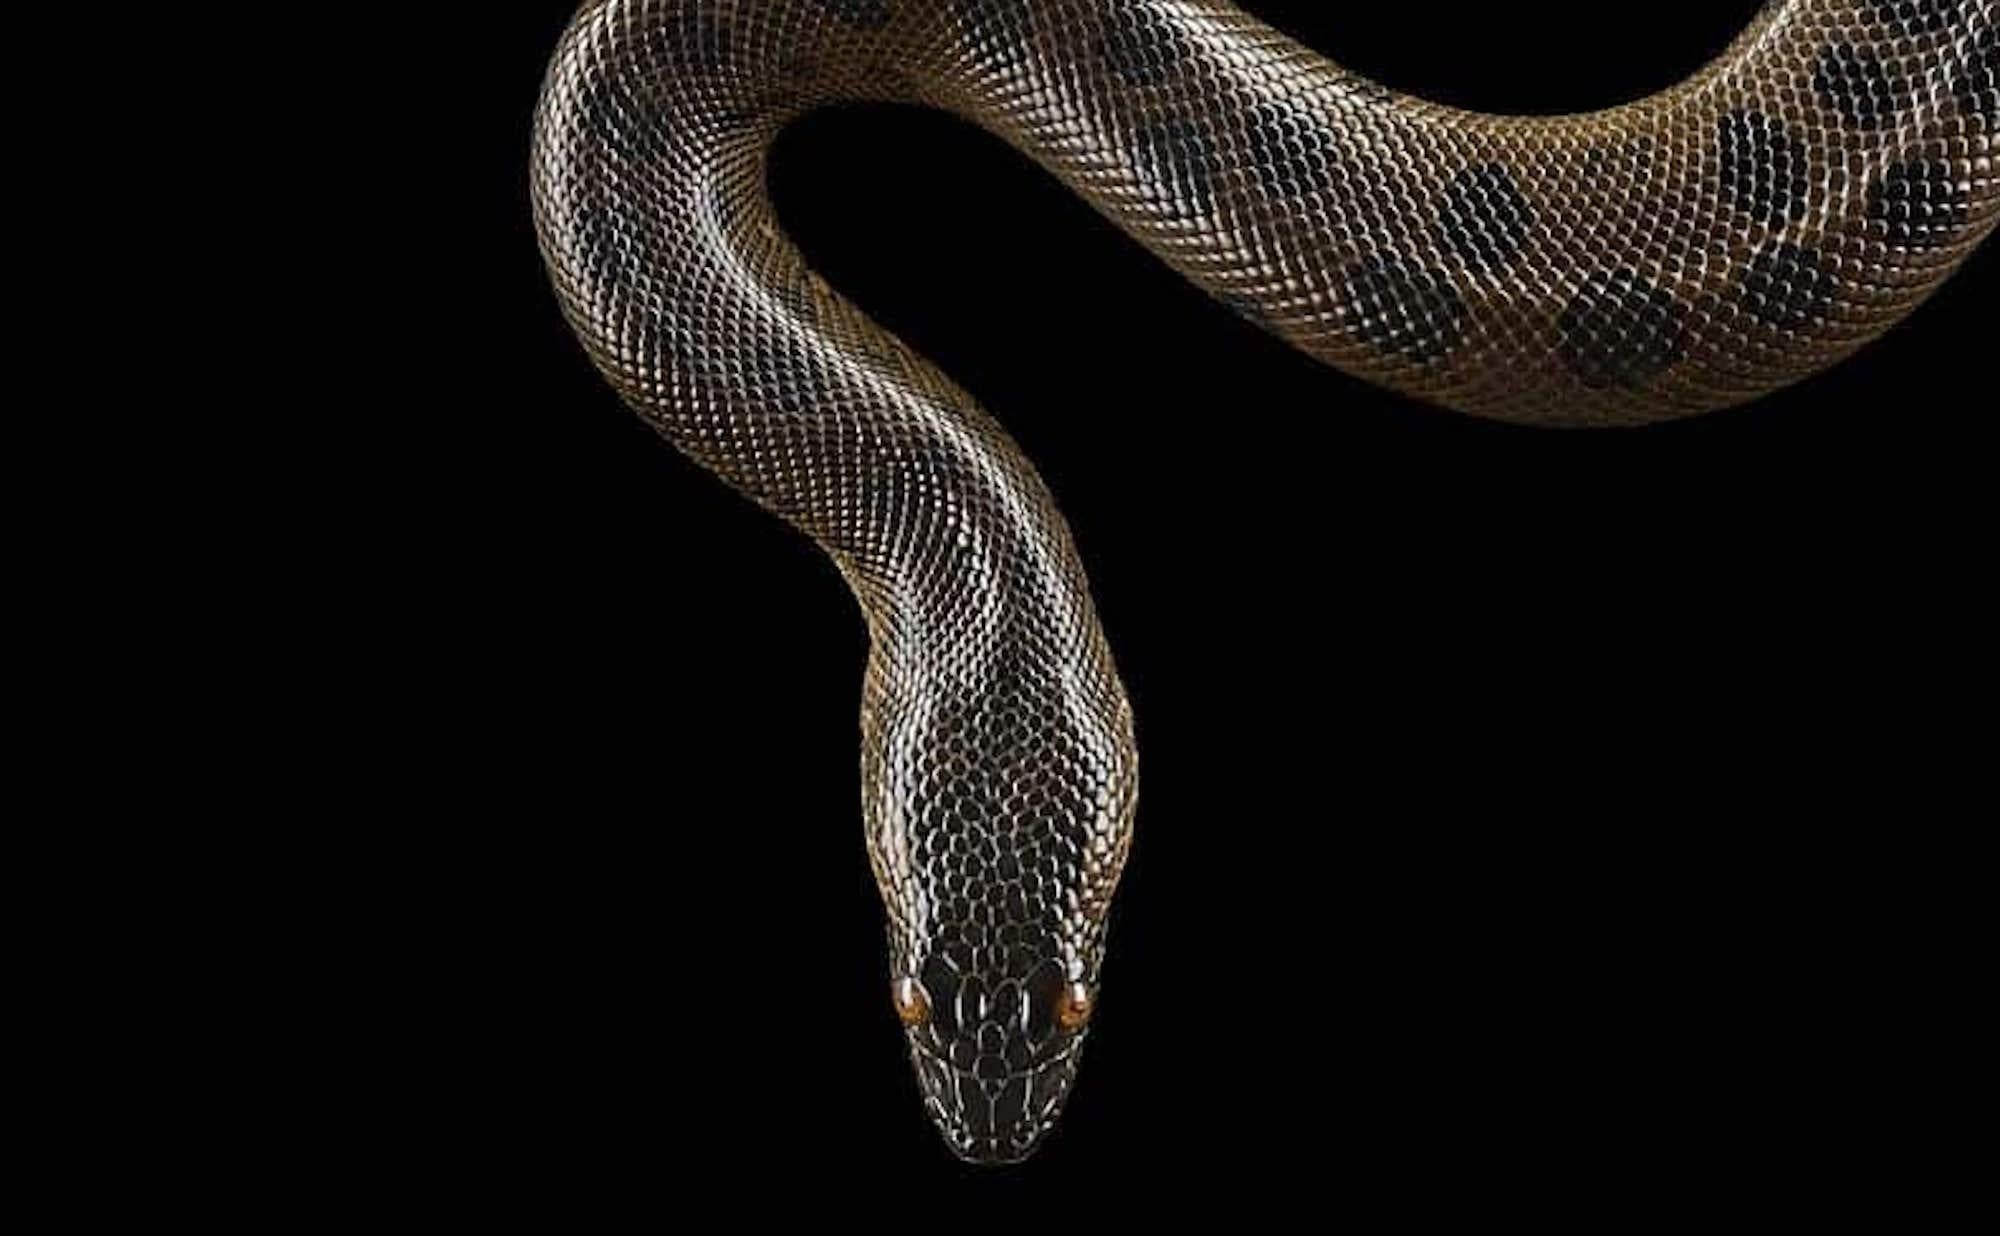 Green Anaconda #1 by Brad Wilson - Animal portrait photography For Sale 4